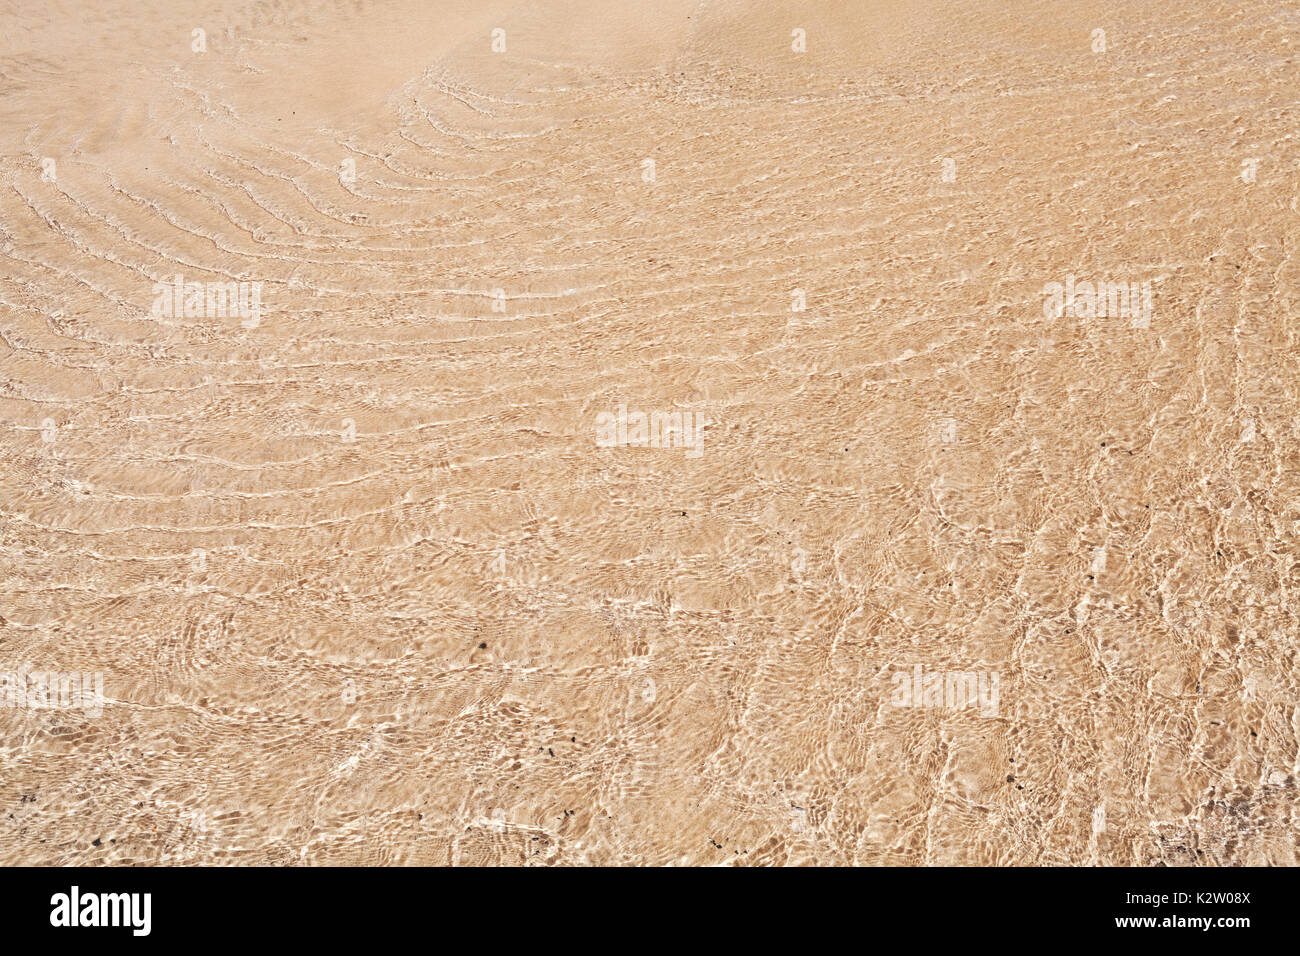 Atlantic Ocean coast background texture, sand under shallow ripple water Stock Photo